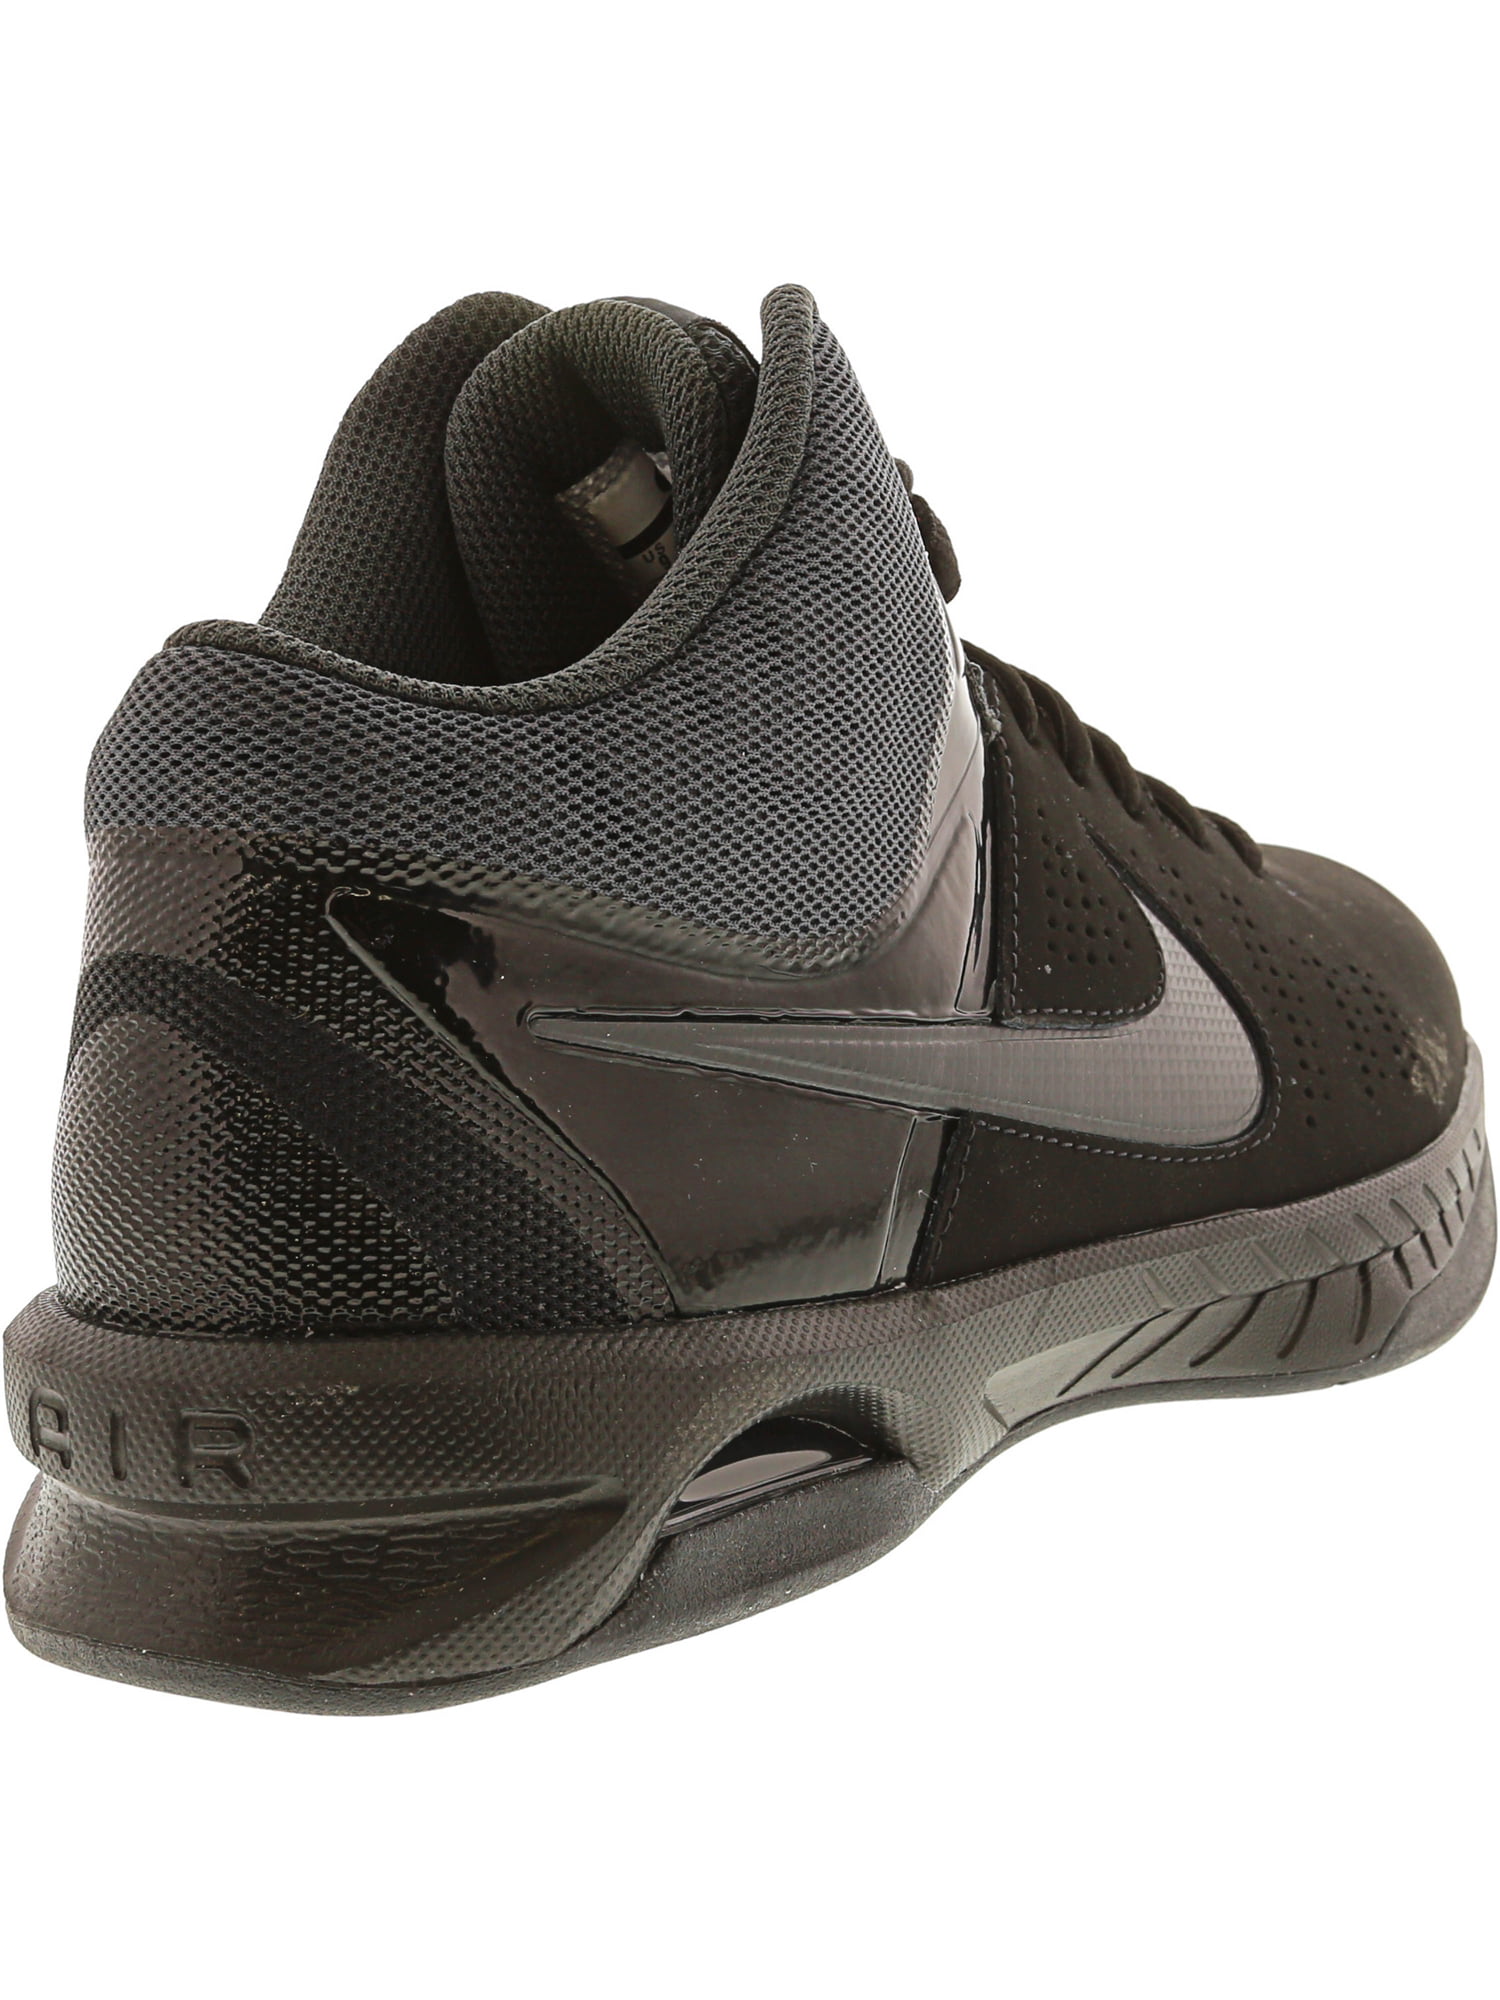 Nike Visi Pro Vi Nbk Black/Anthracite Ankle-High Nubuck Basketball Shoe - 10M Walmart.com